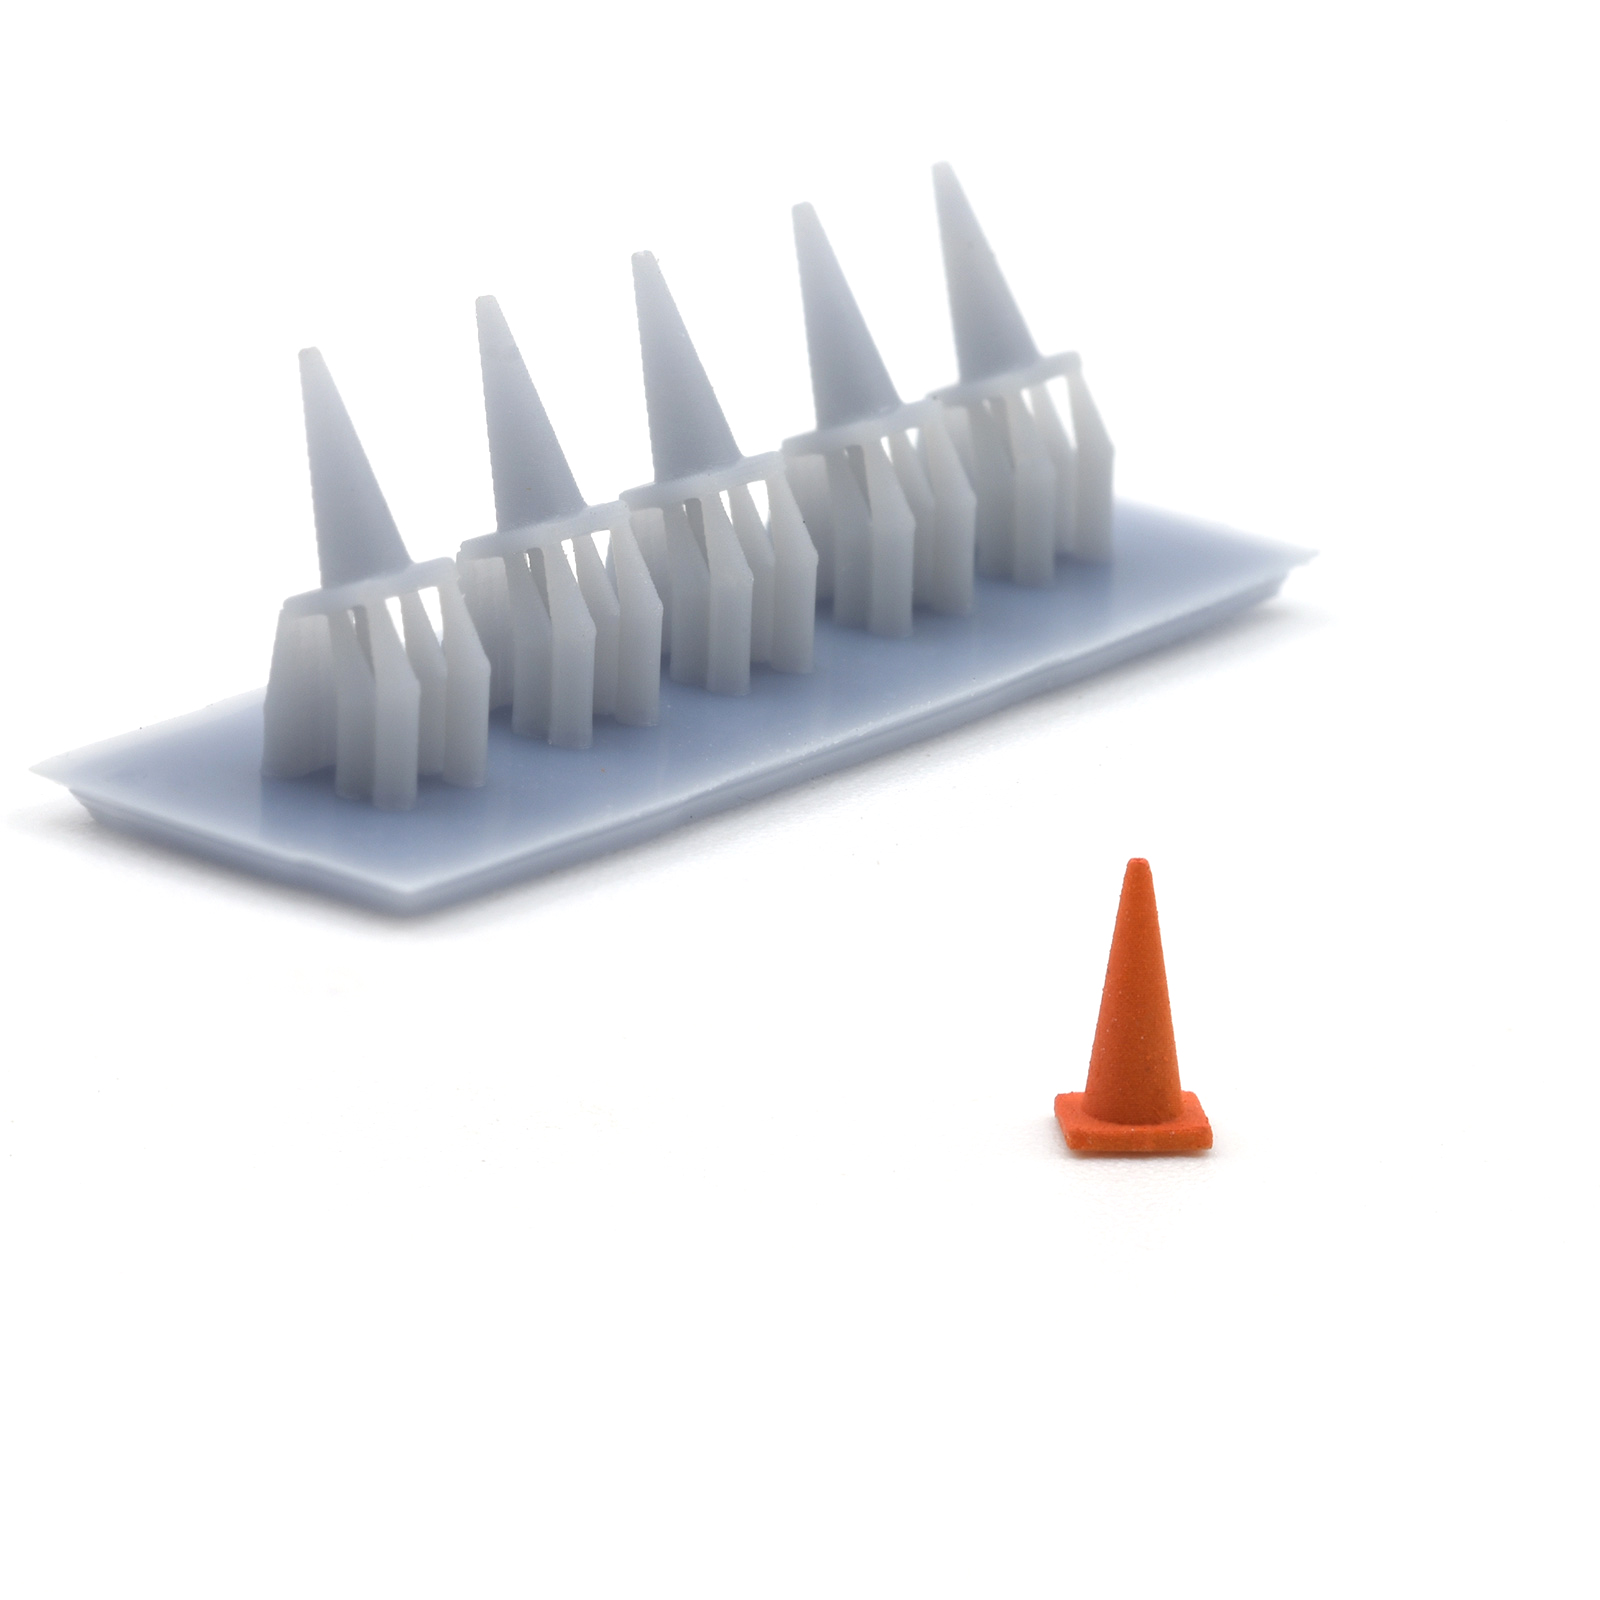 Traffic Cones by Scientific